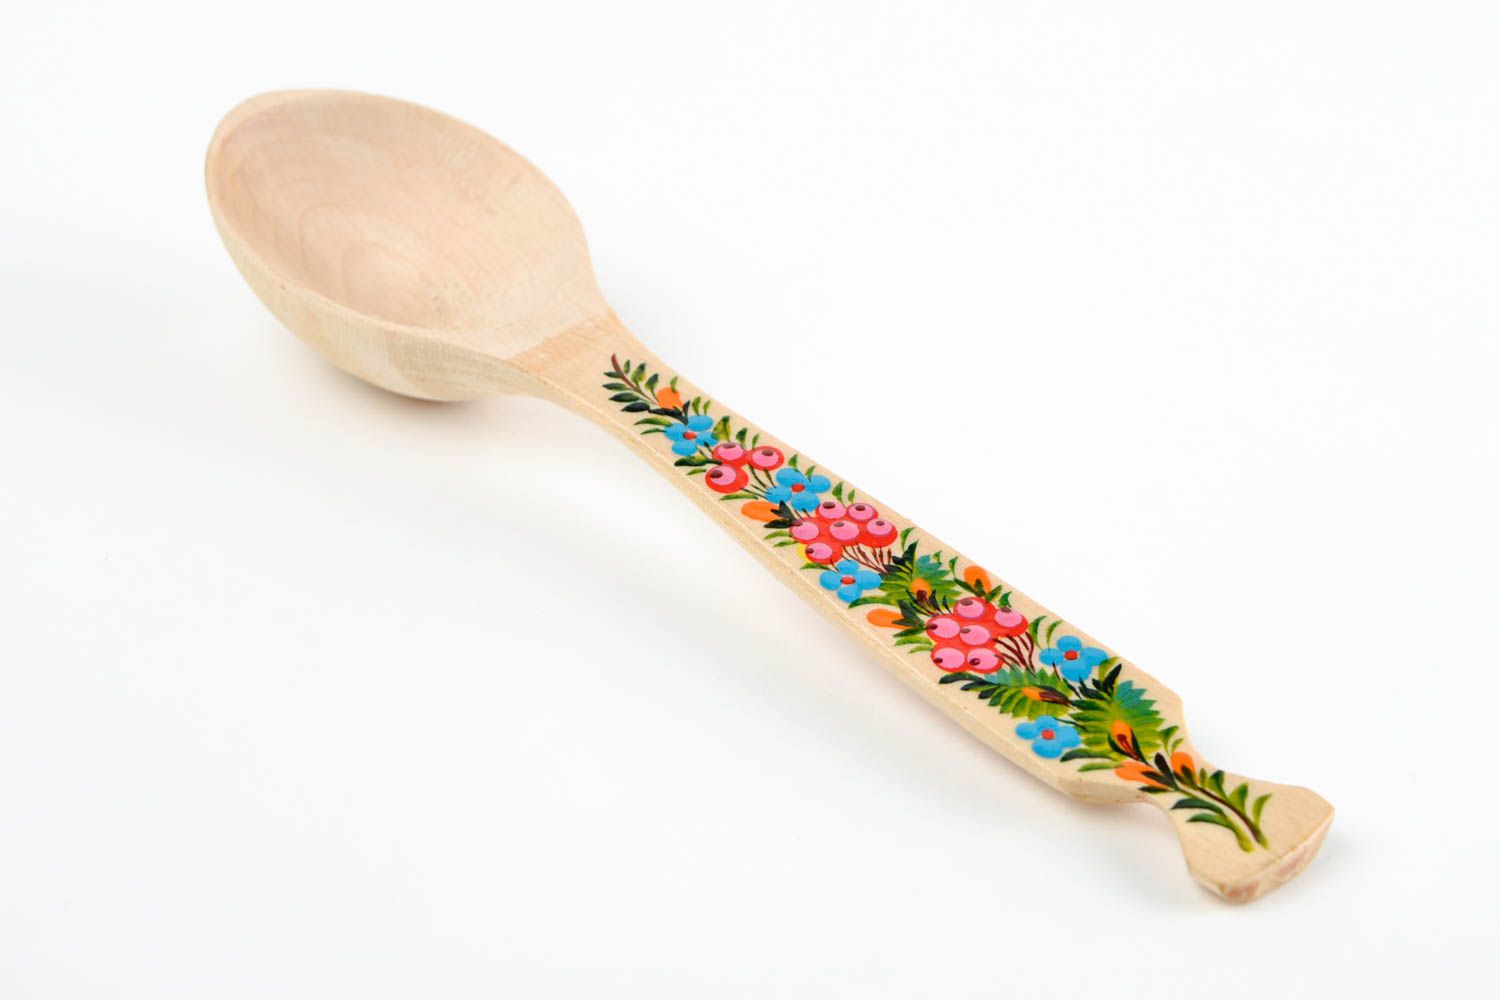 Handmade spoon designer spoon wooden cutlery gift ideas decor ideas unusul spoon photo 3